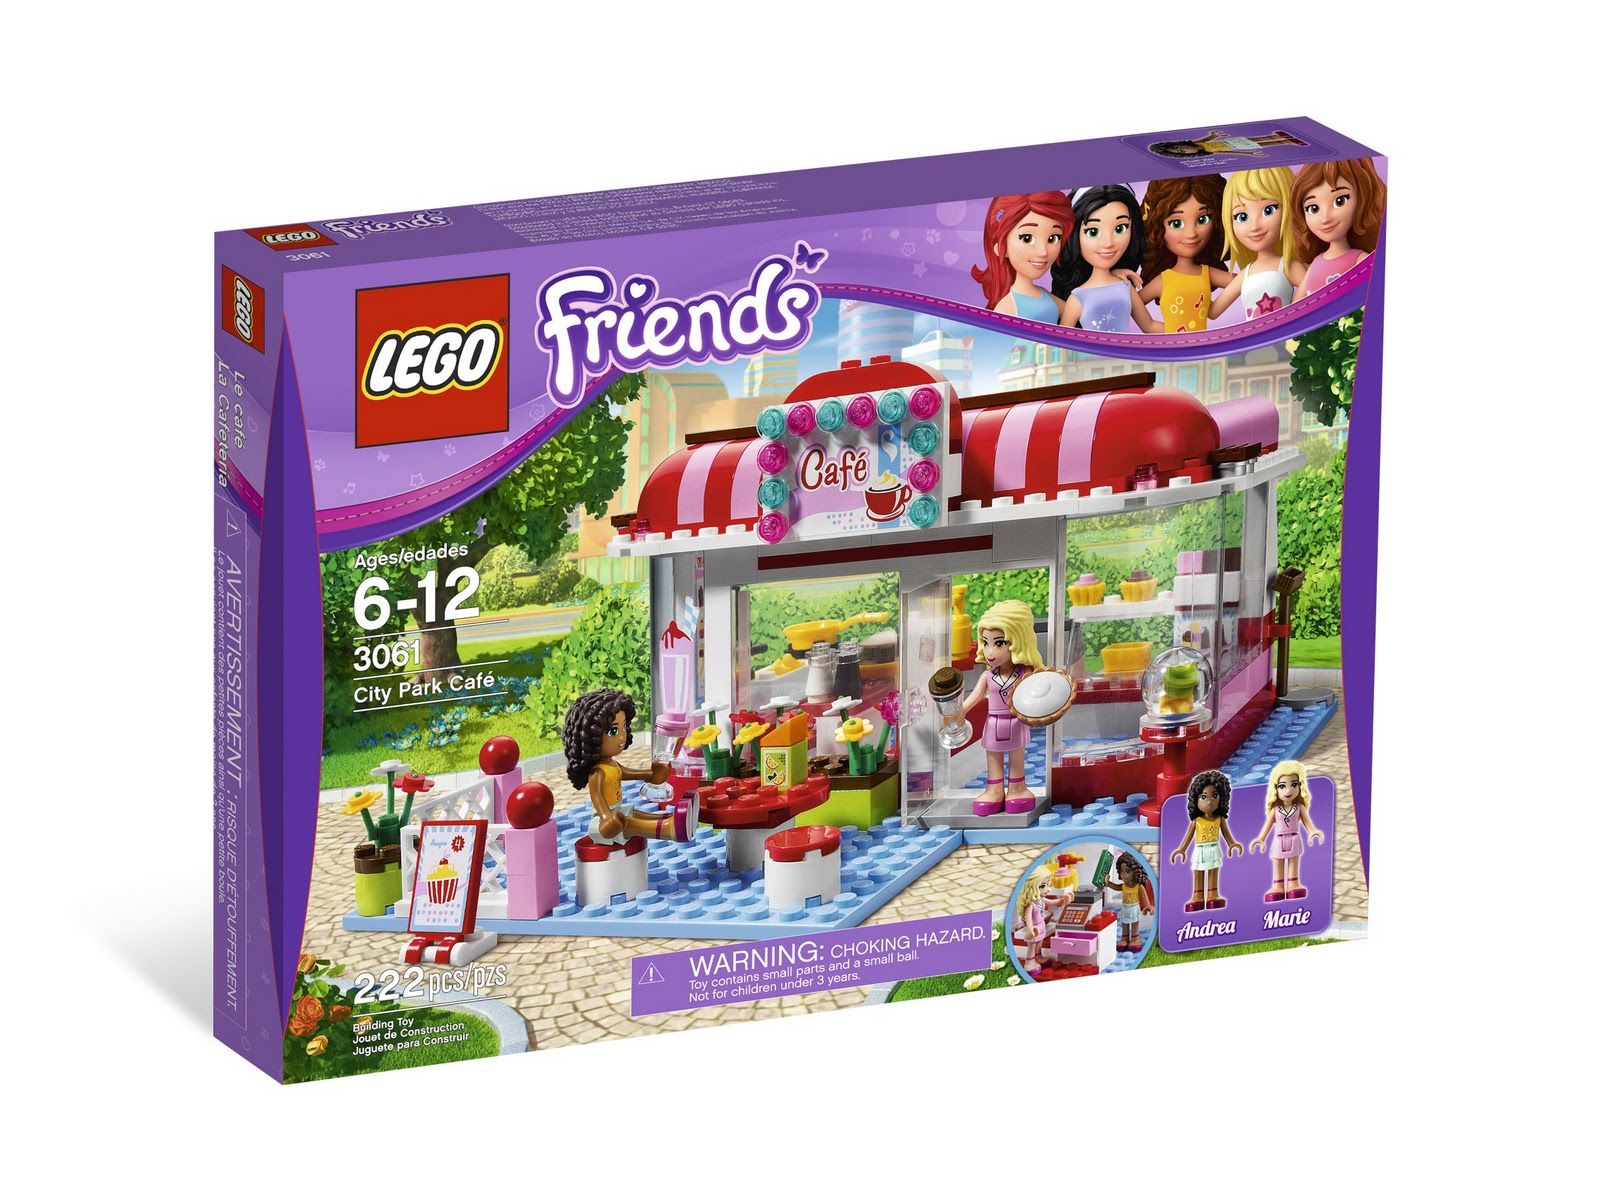 Brick Friends: LEGO Friends 3061 City Park Cafe